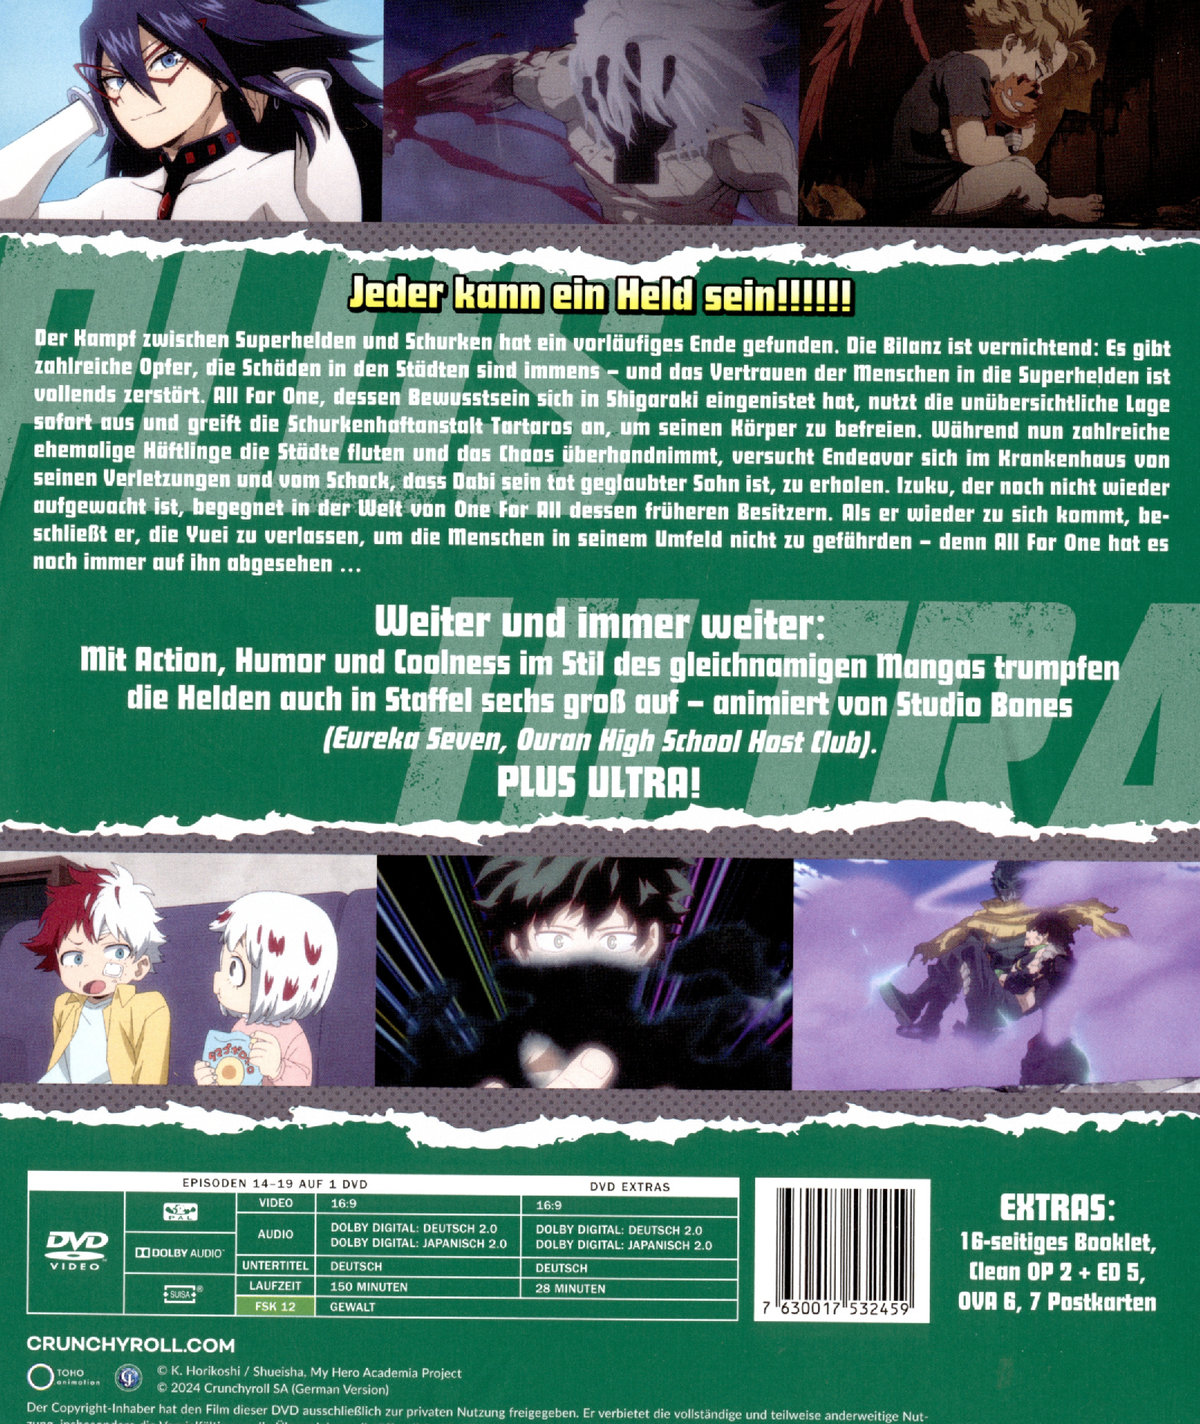 My Hero Academia - 6. Staffel - Vol.3  (DVD)